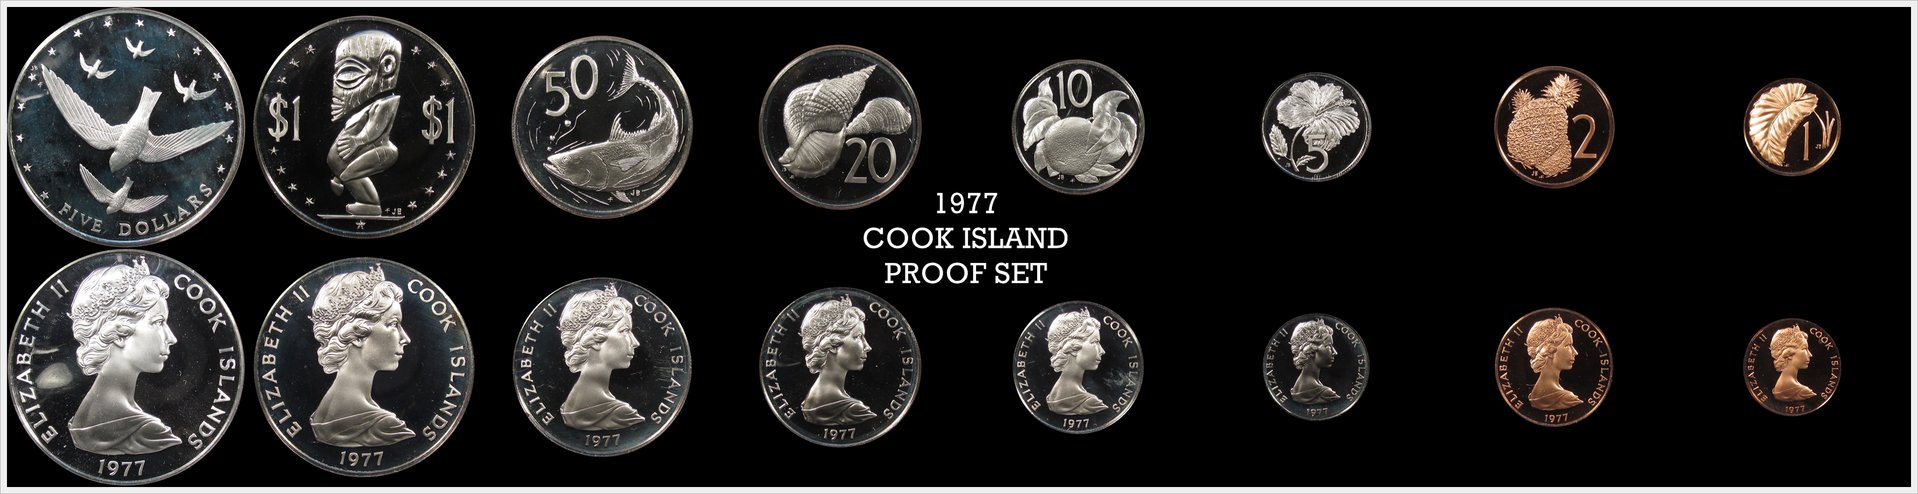 Cook Island 1977 Proof Set.jpg